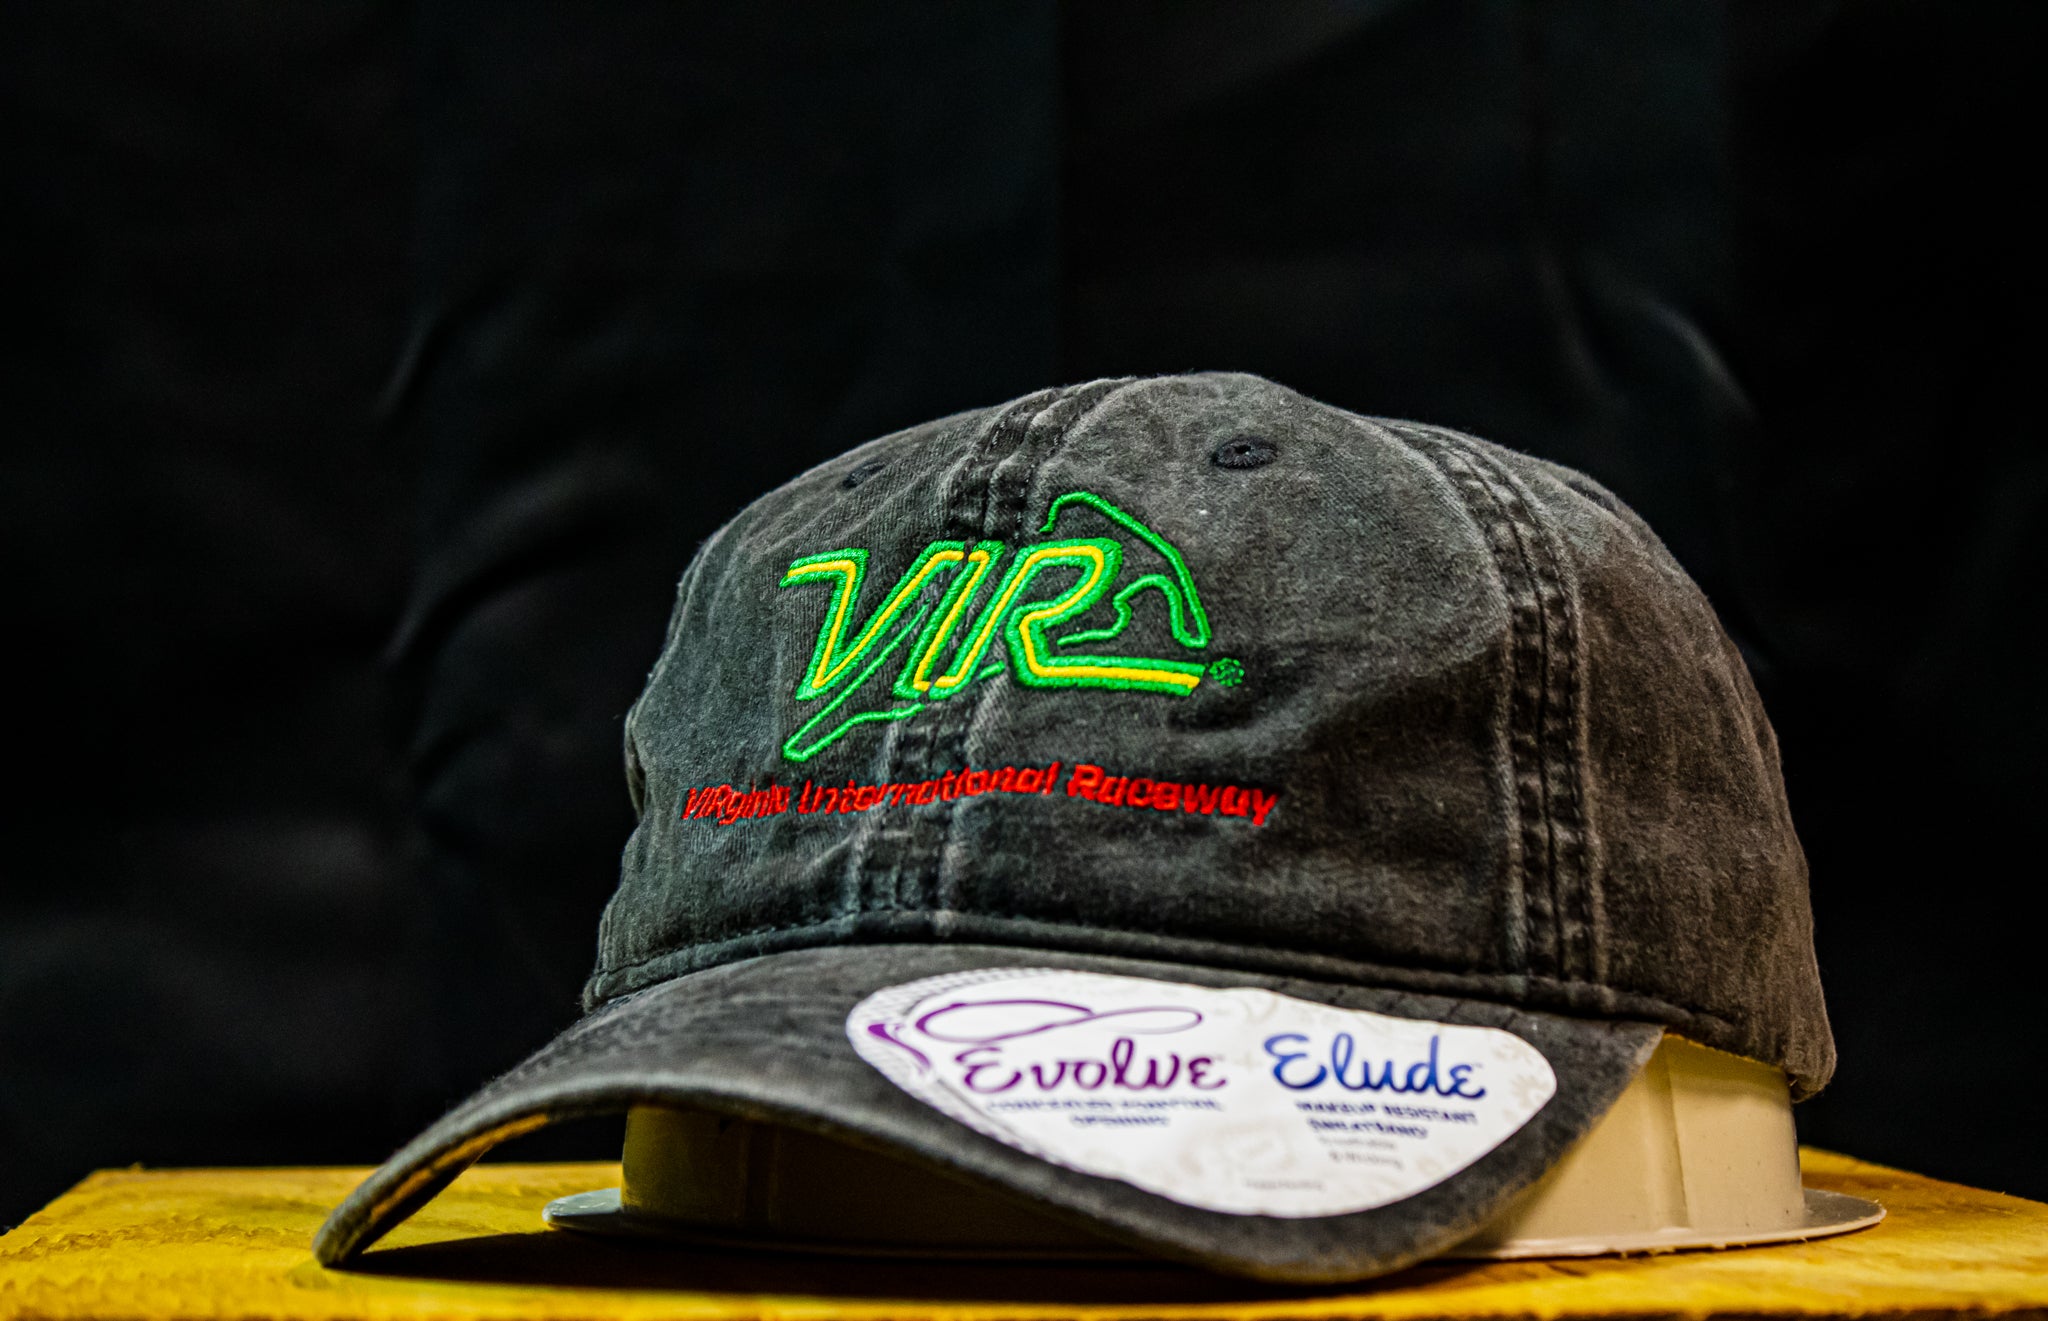 VIR Ladies Embroidered Cap - 3 different styles